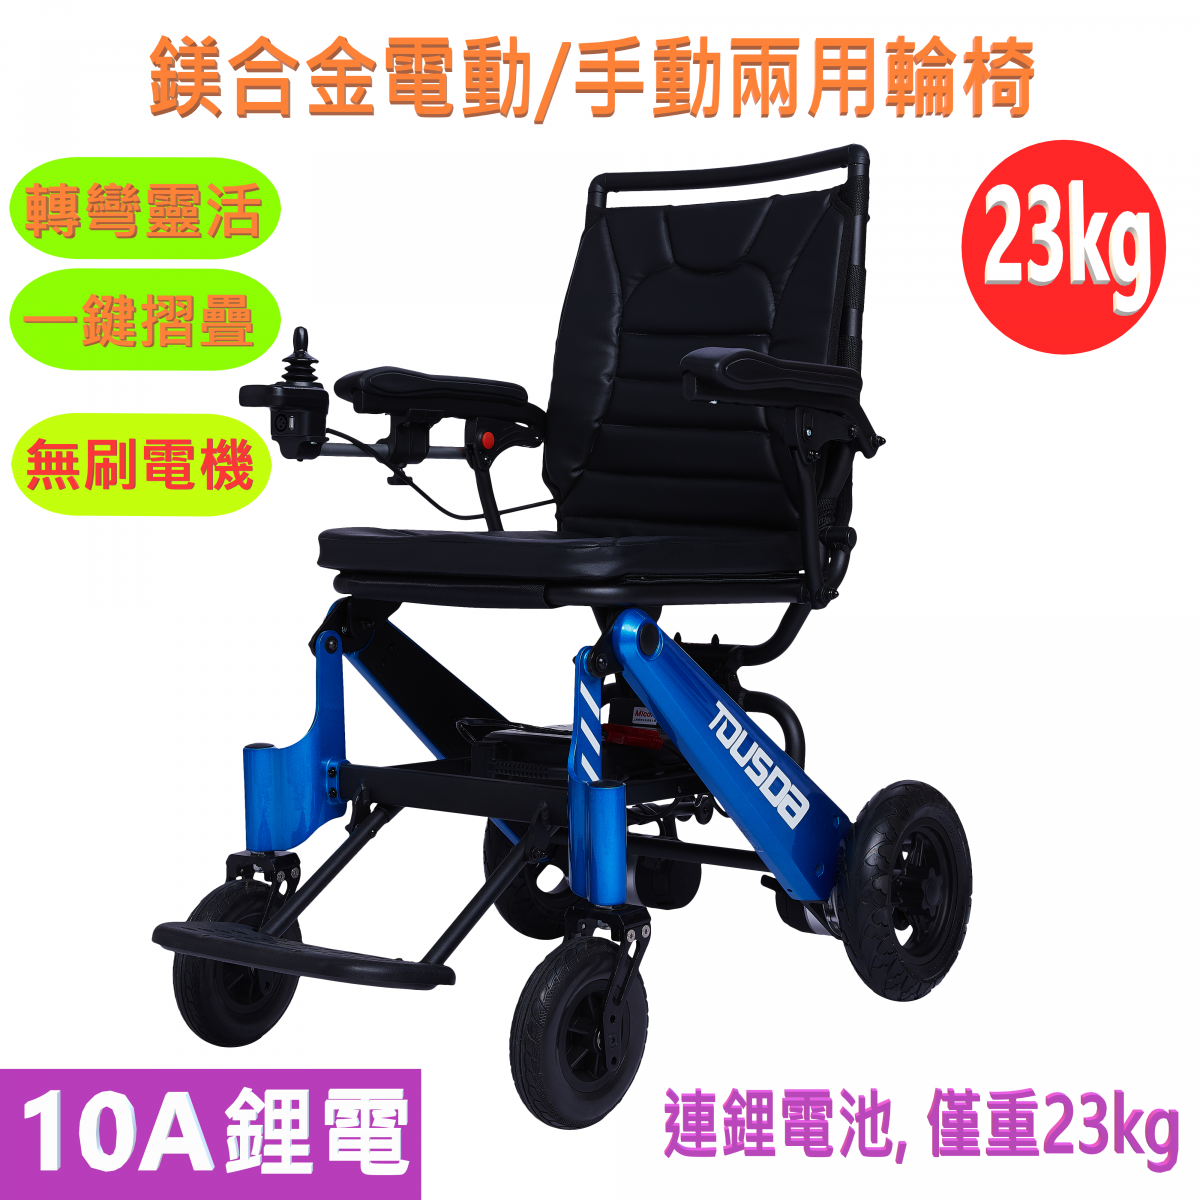 Brushless DC Electromagnetic brake Motor Lightweight Electric Wheelchair